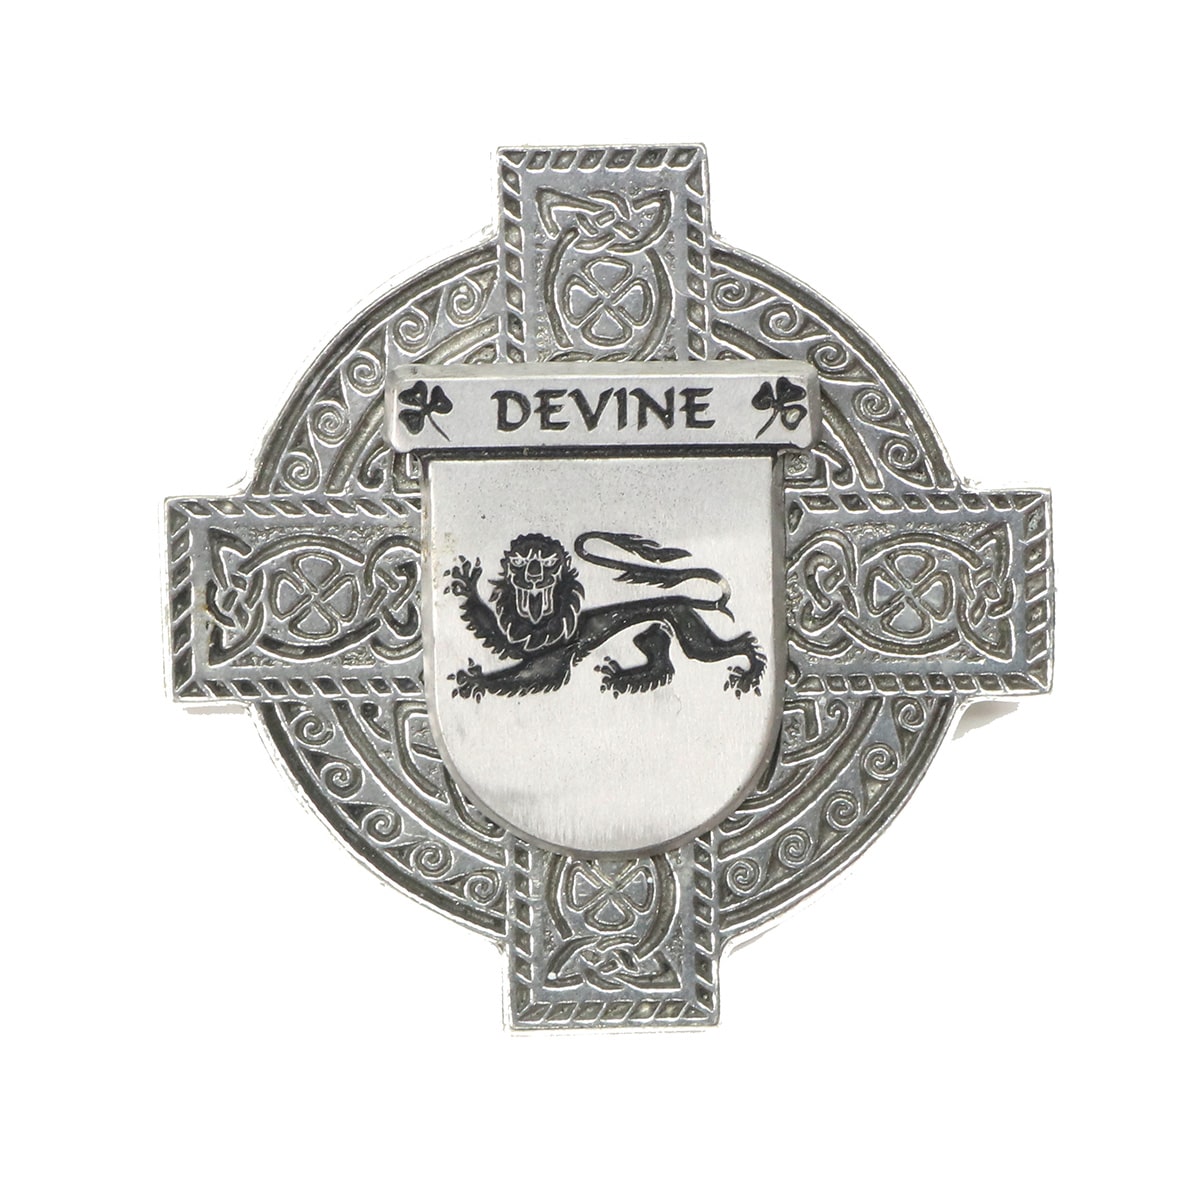 Devine Coat of Arms Pewter Cross Badge | Kilts-n-Stuff.com